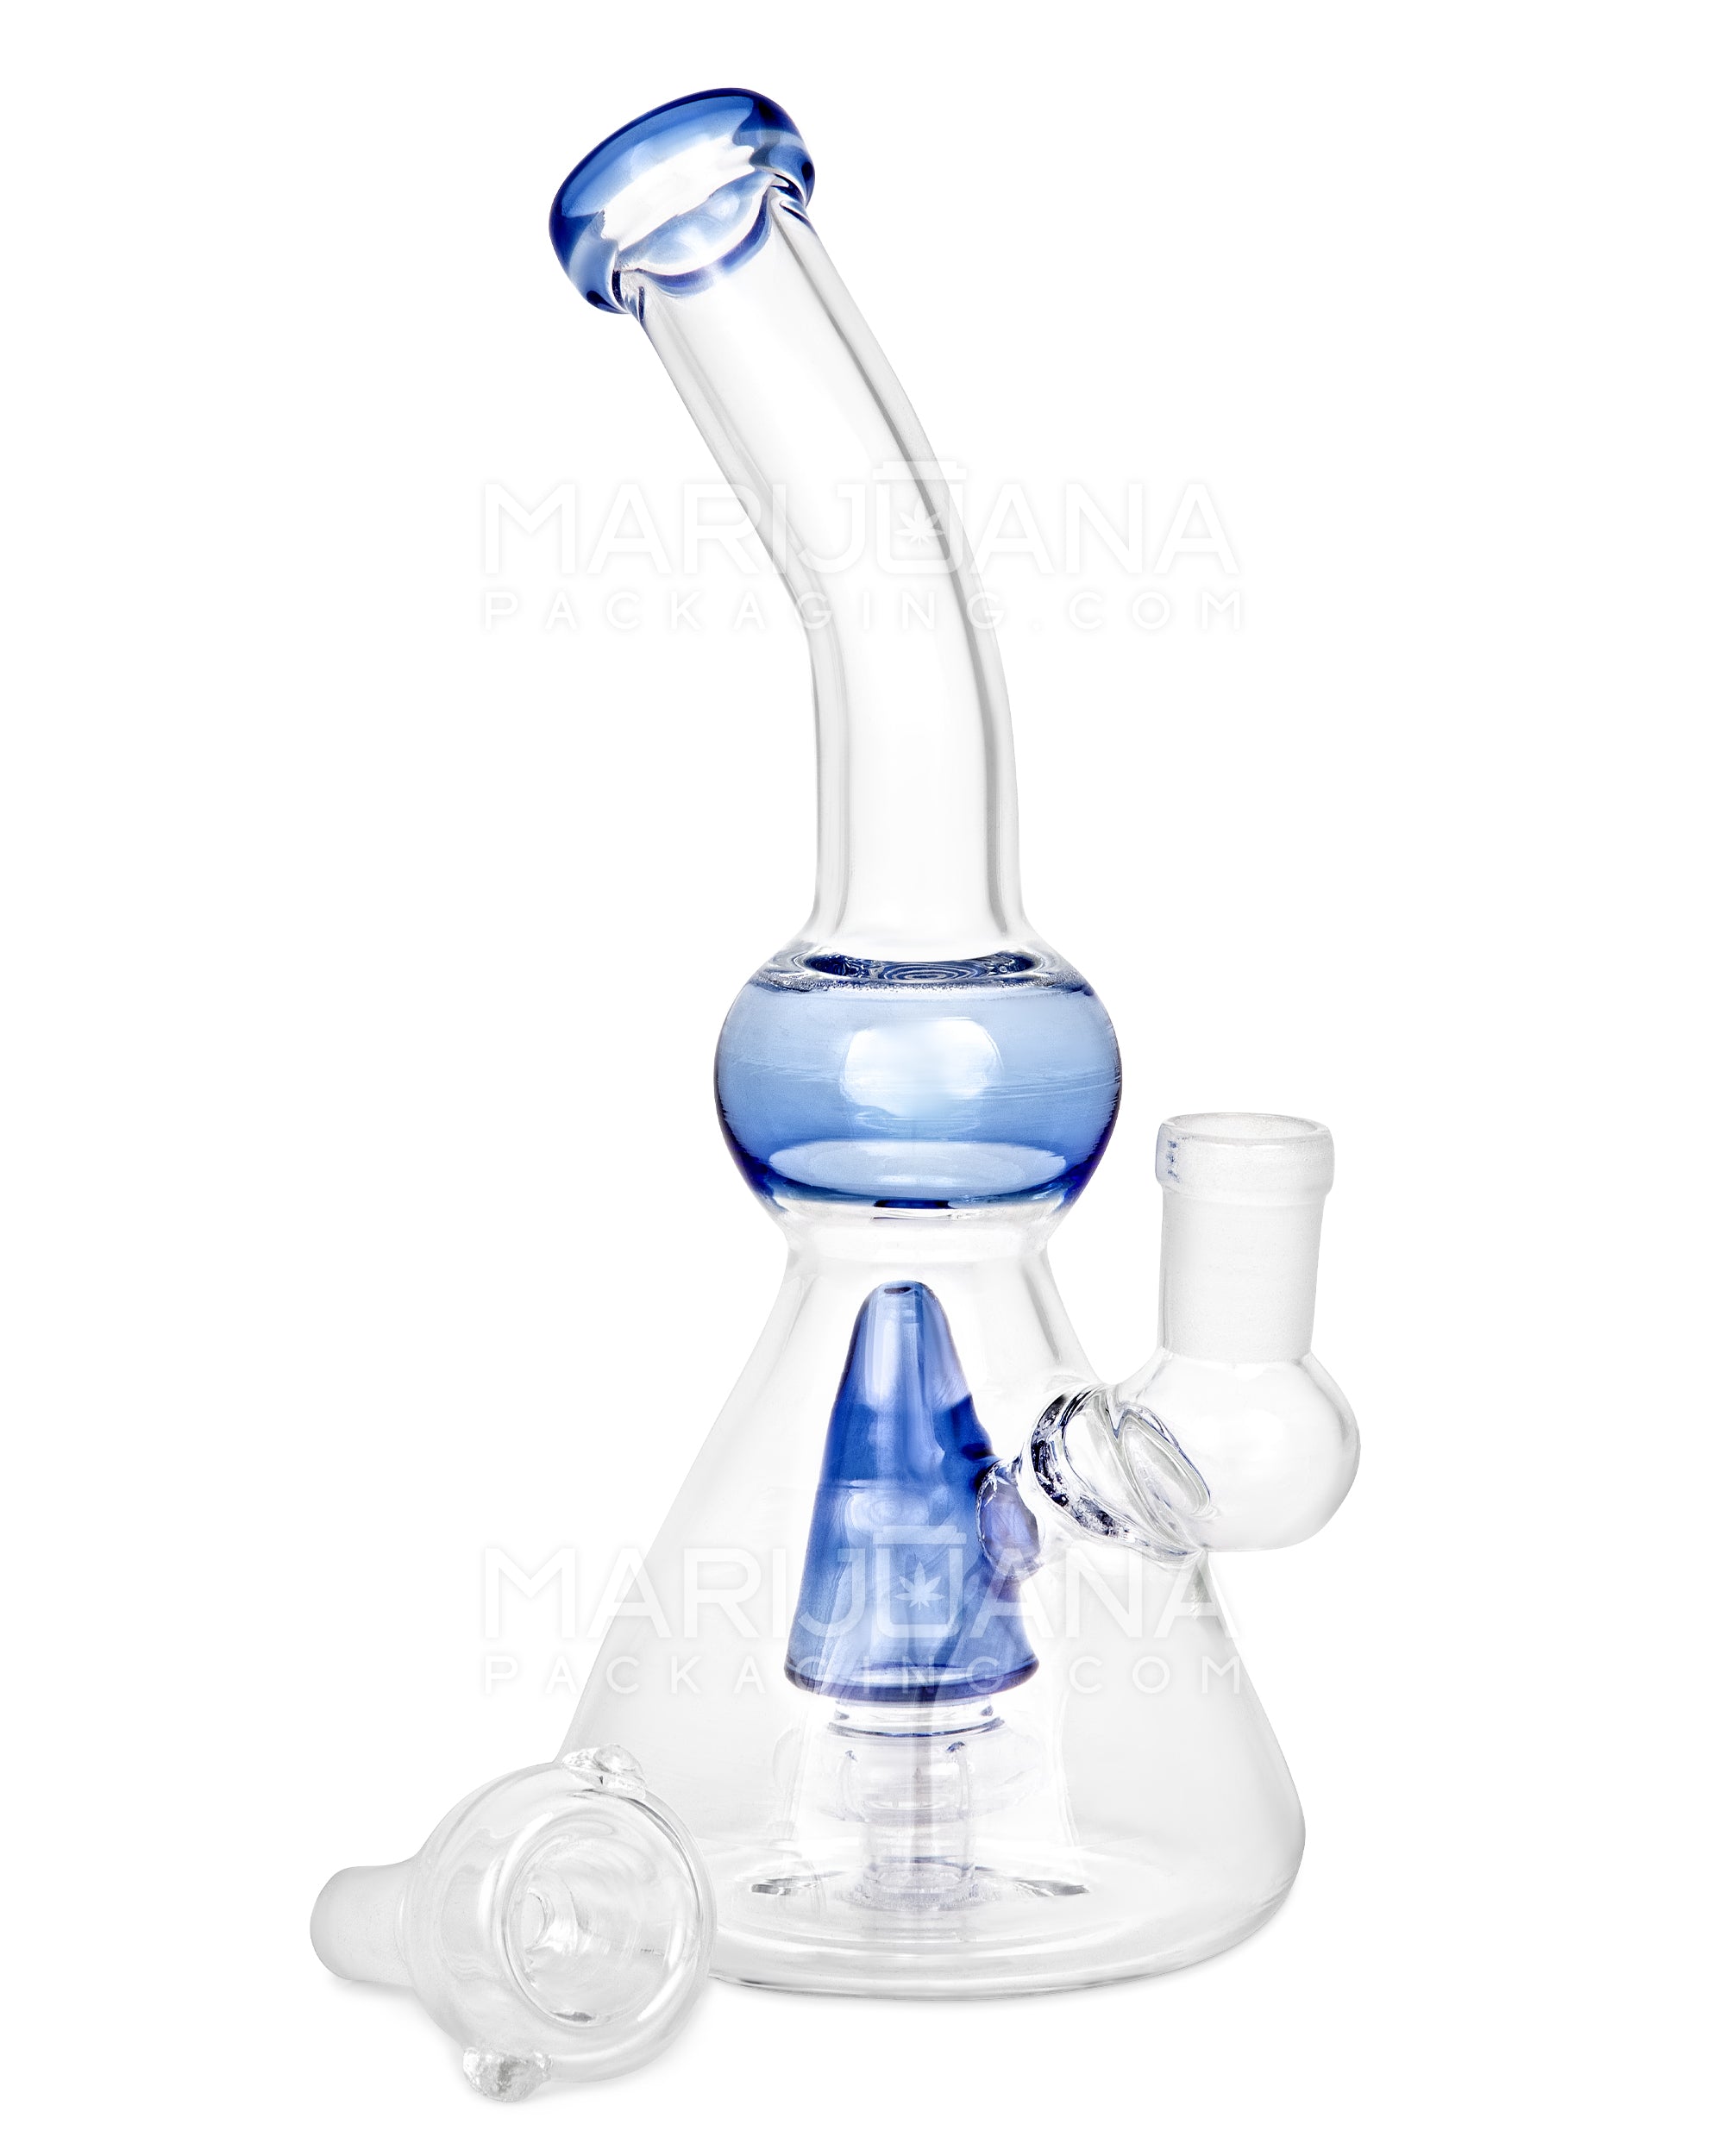 Bent Neck Showerhead Perc Glass Beaker Water Pipe | 7in Tall - 14mm Bowl - Blue - 2